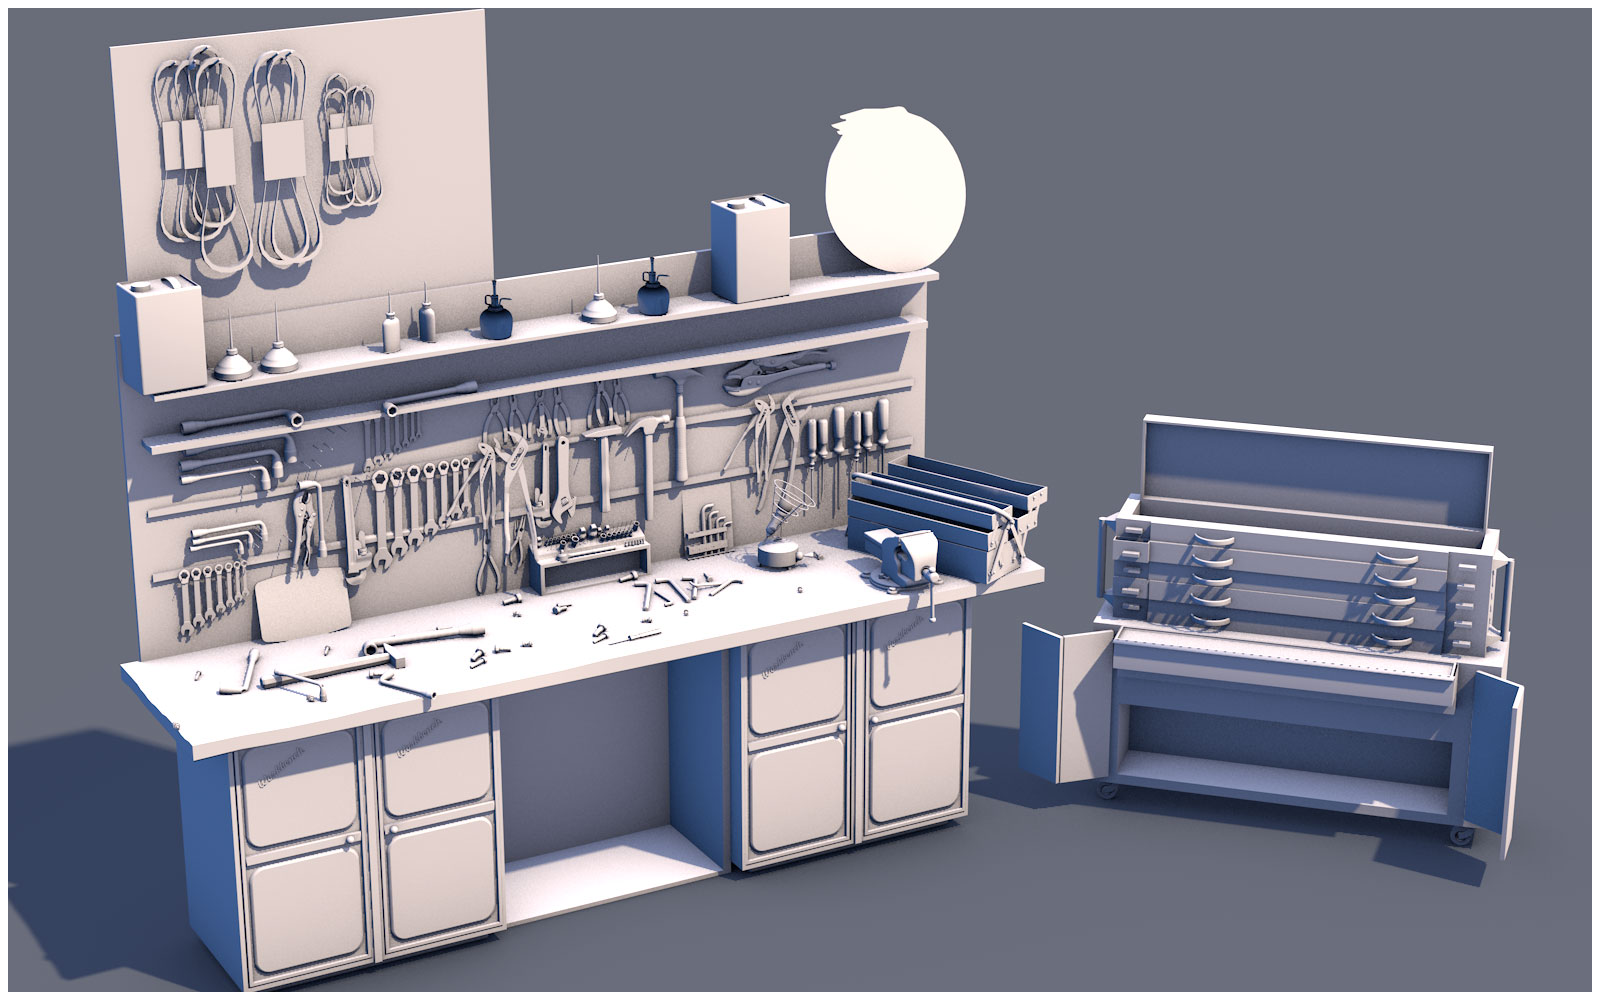 Workshop Workbench by: Ansiko, 3D Models by Daz 3D